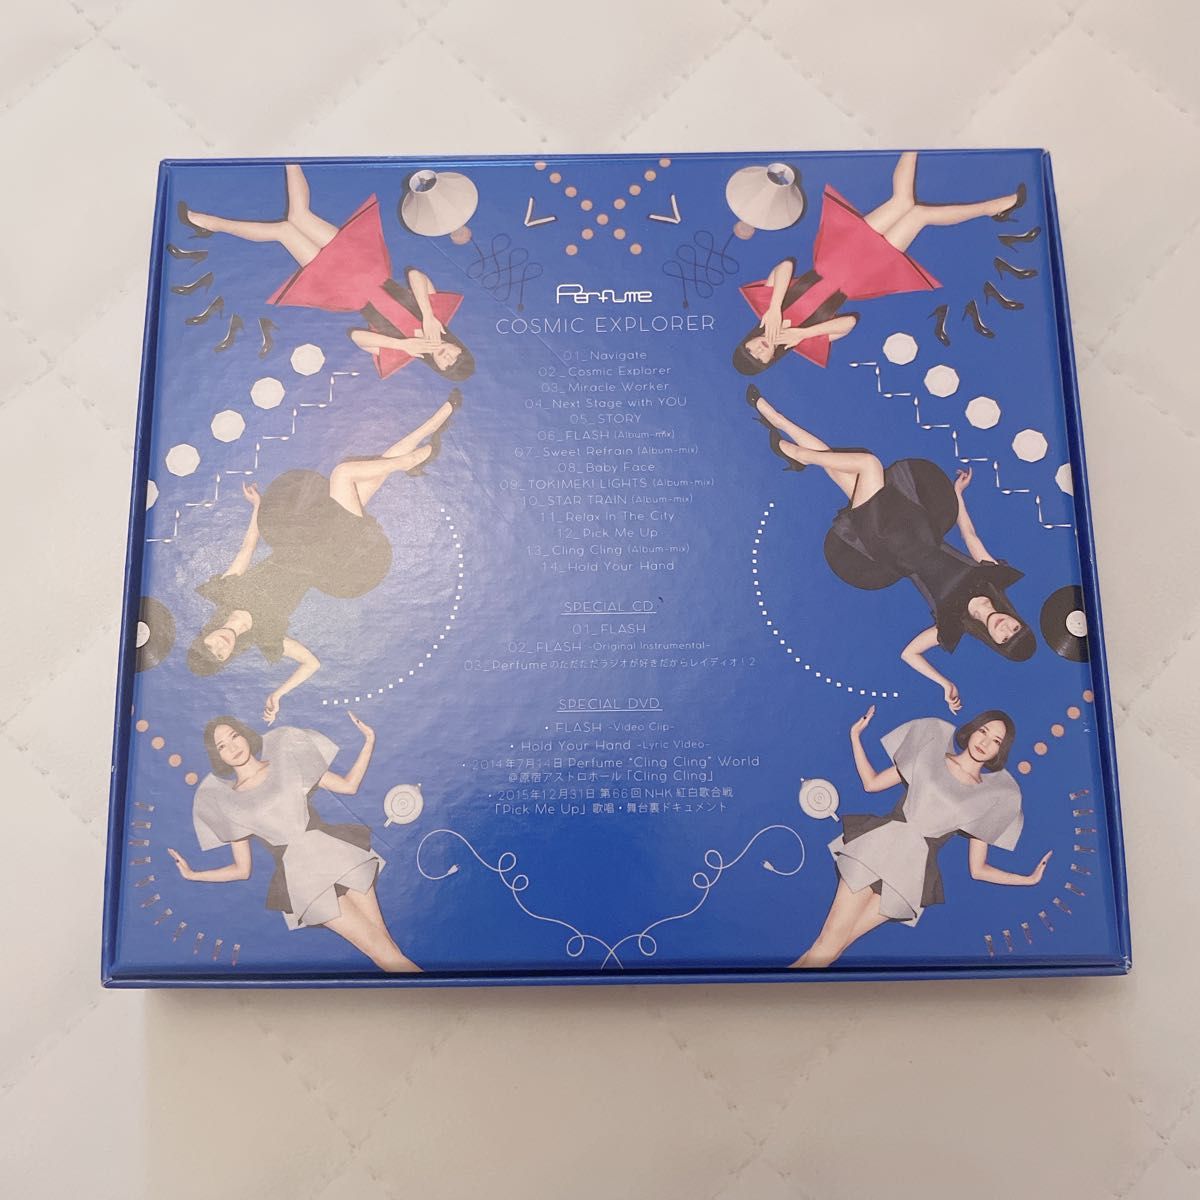 Perfume COSMIC EXPLORER 初回限定盤A ブルーレイ